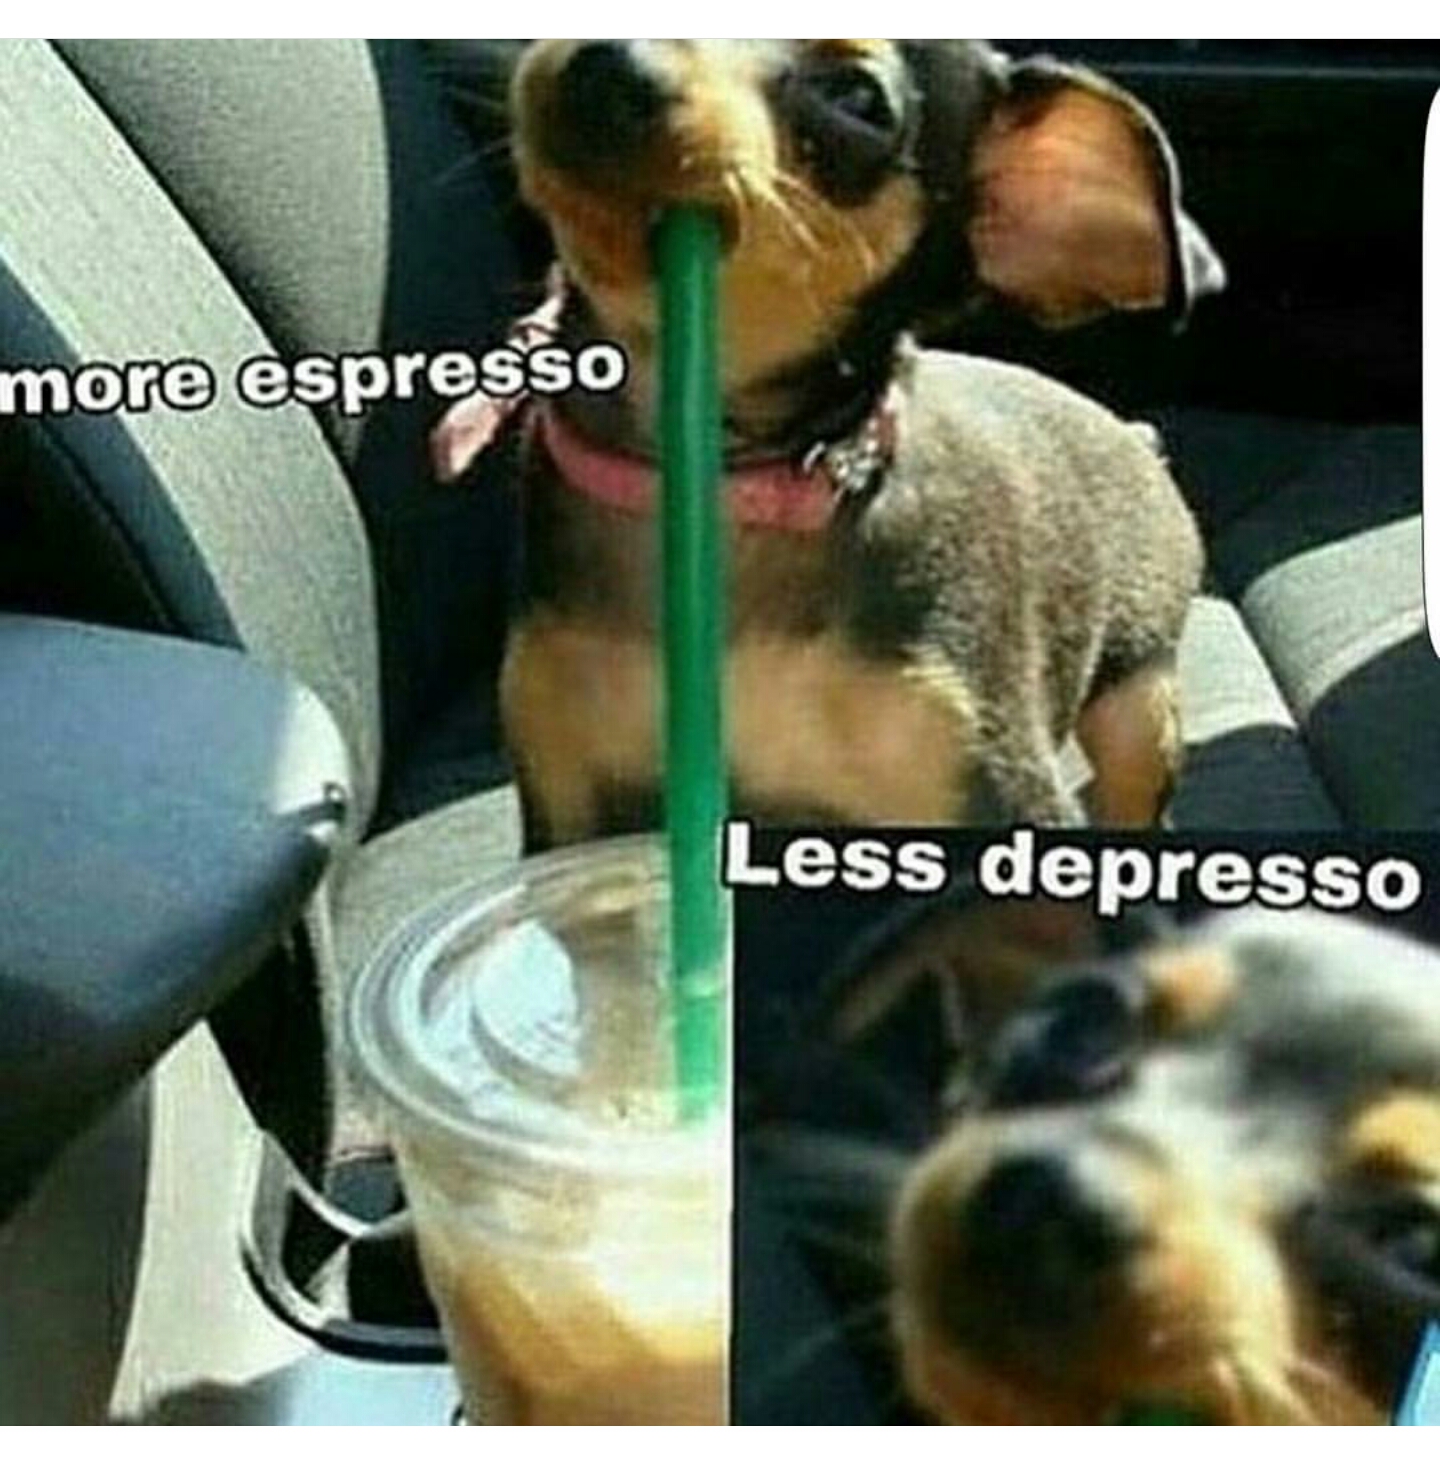 more espresso the less depresso - more espresso Less depresso